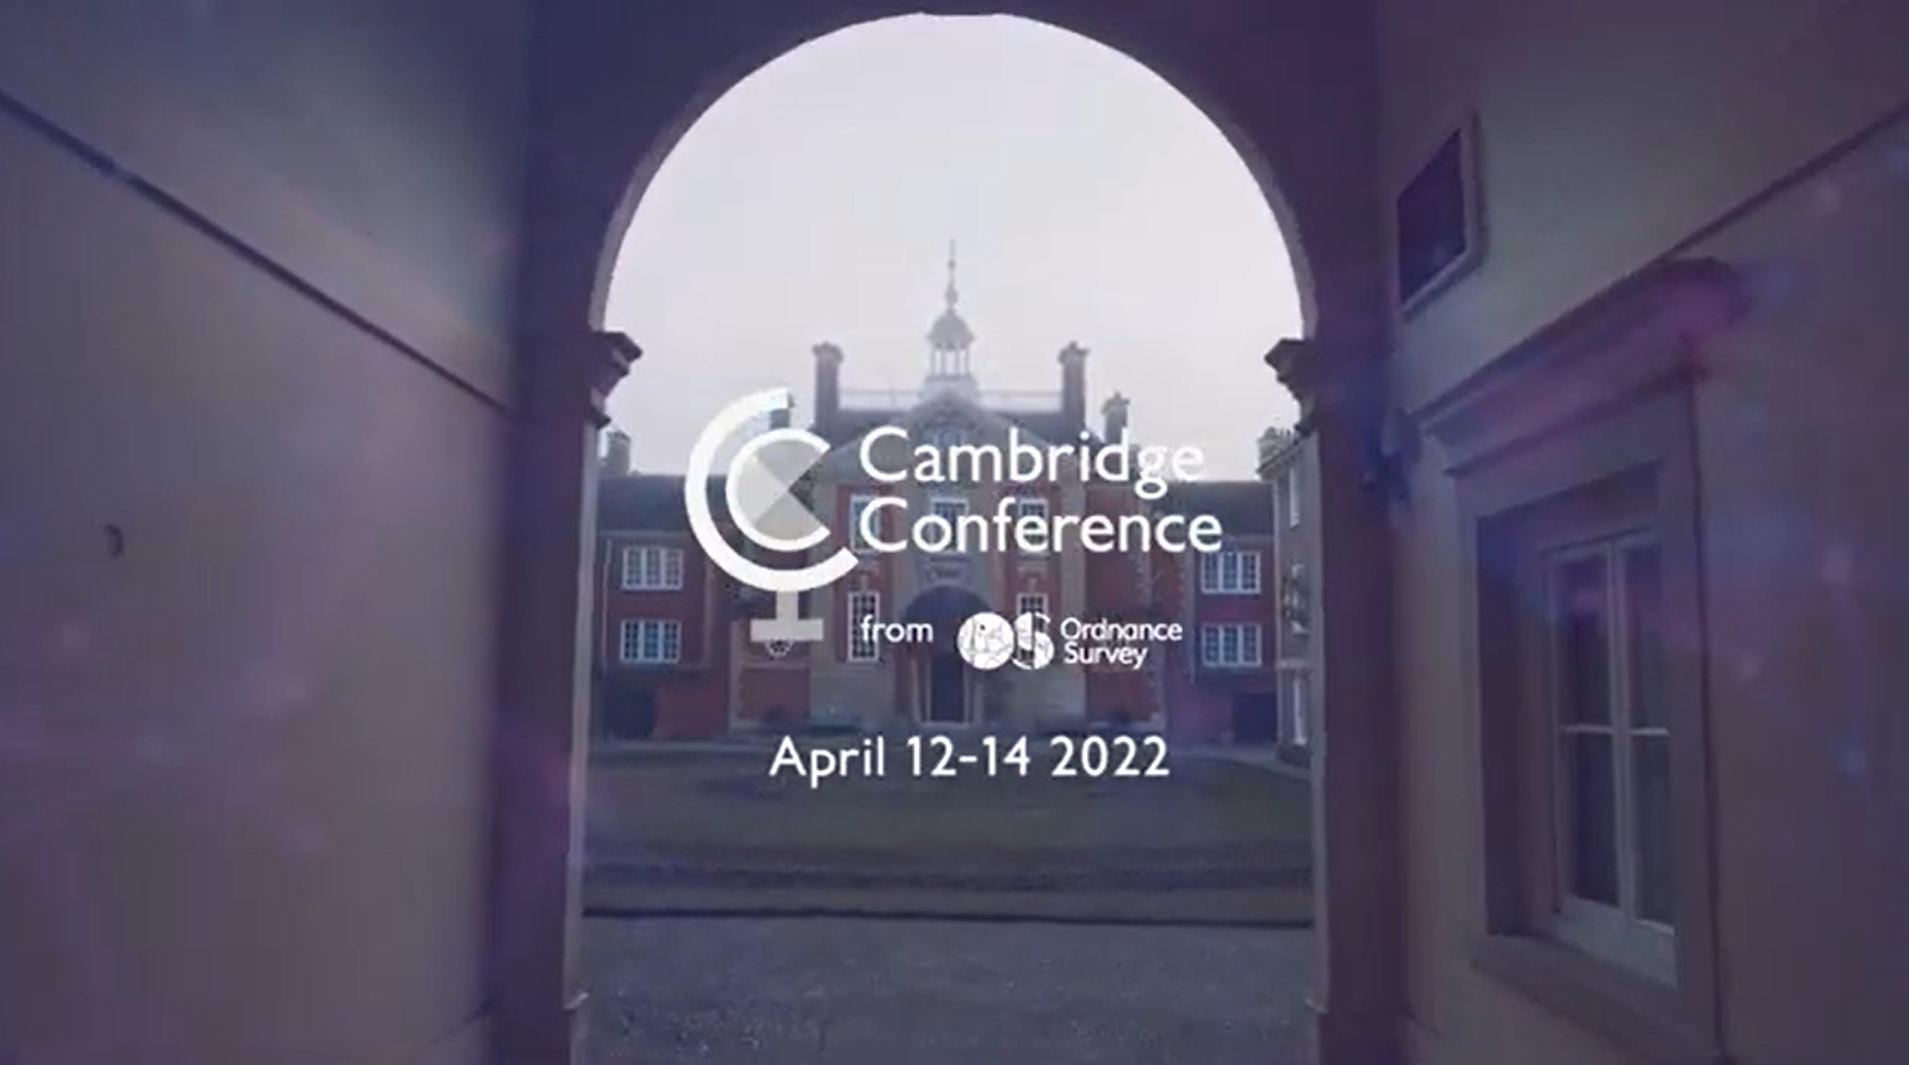 Cambridge Conference hybrid event